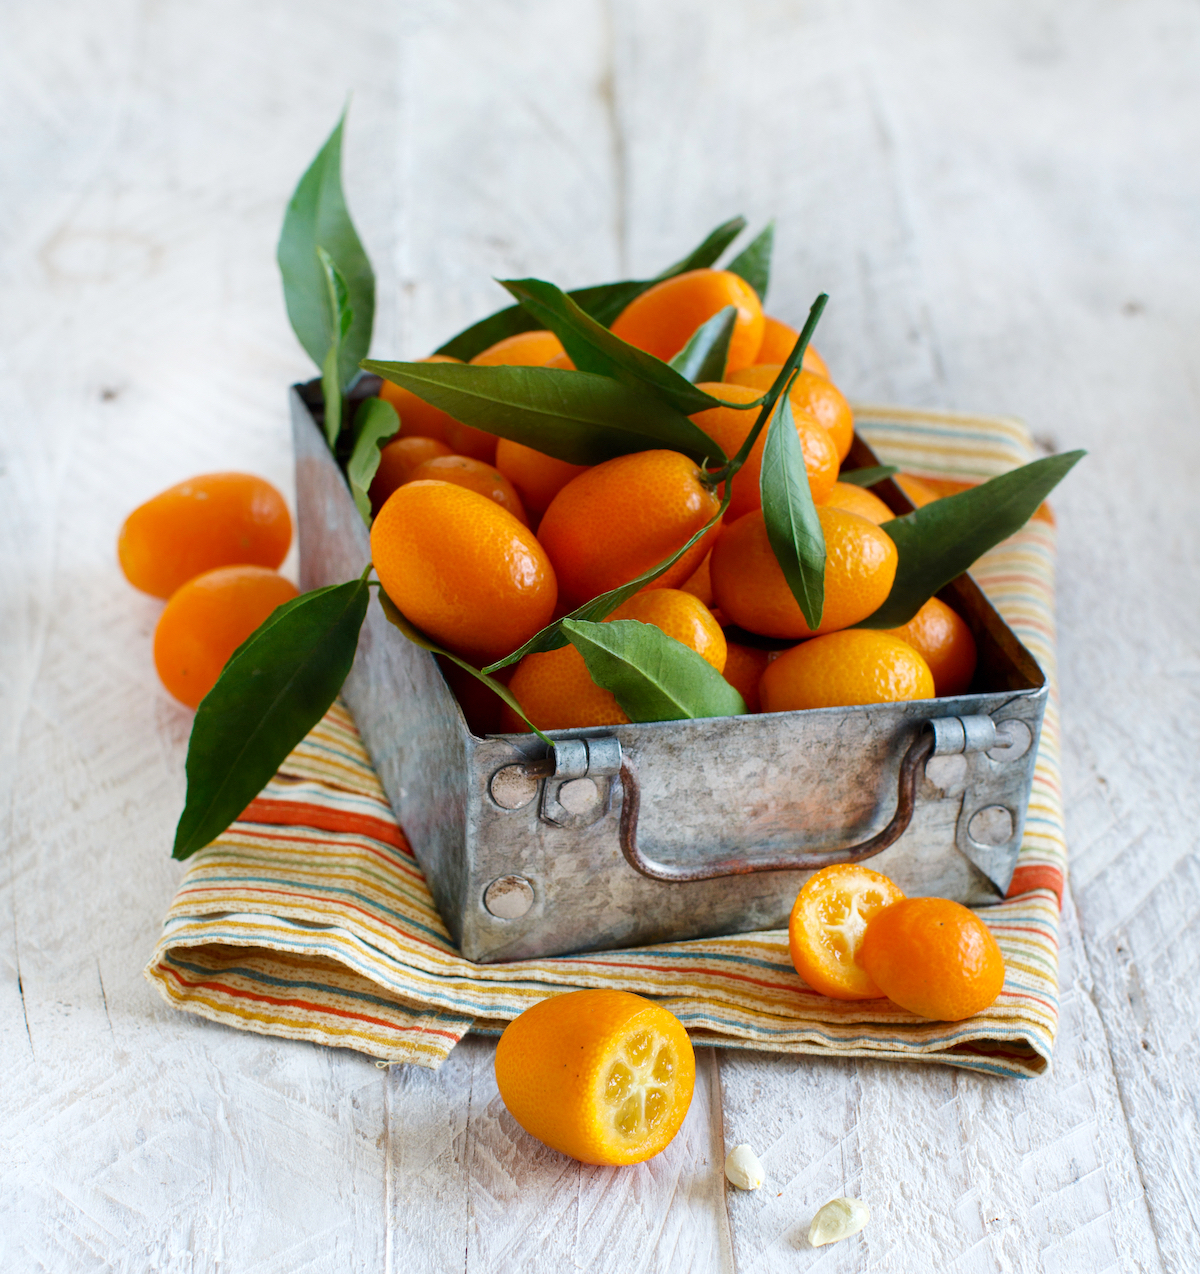 Kumquats ©Karissaa shutterstock